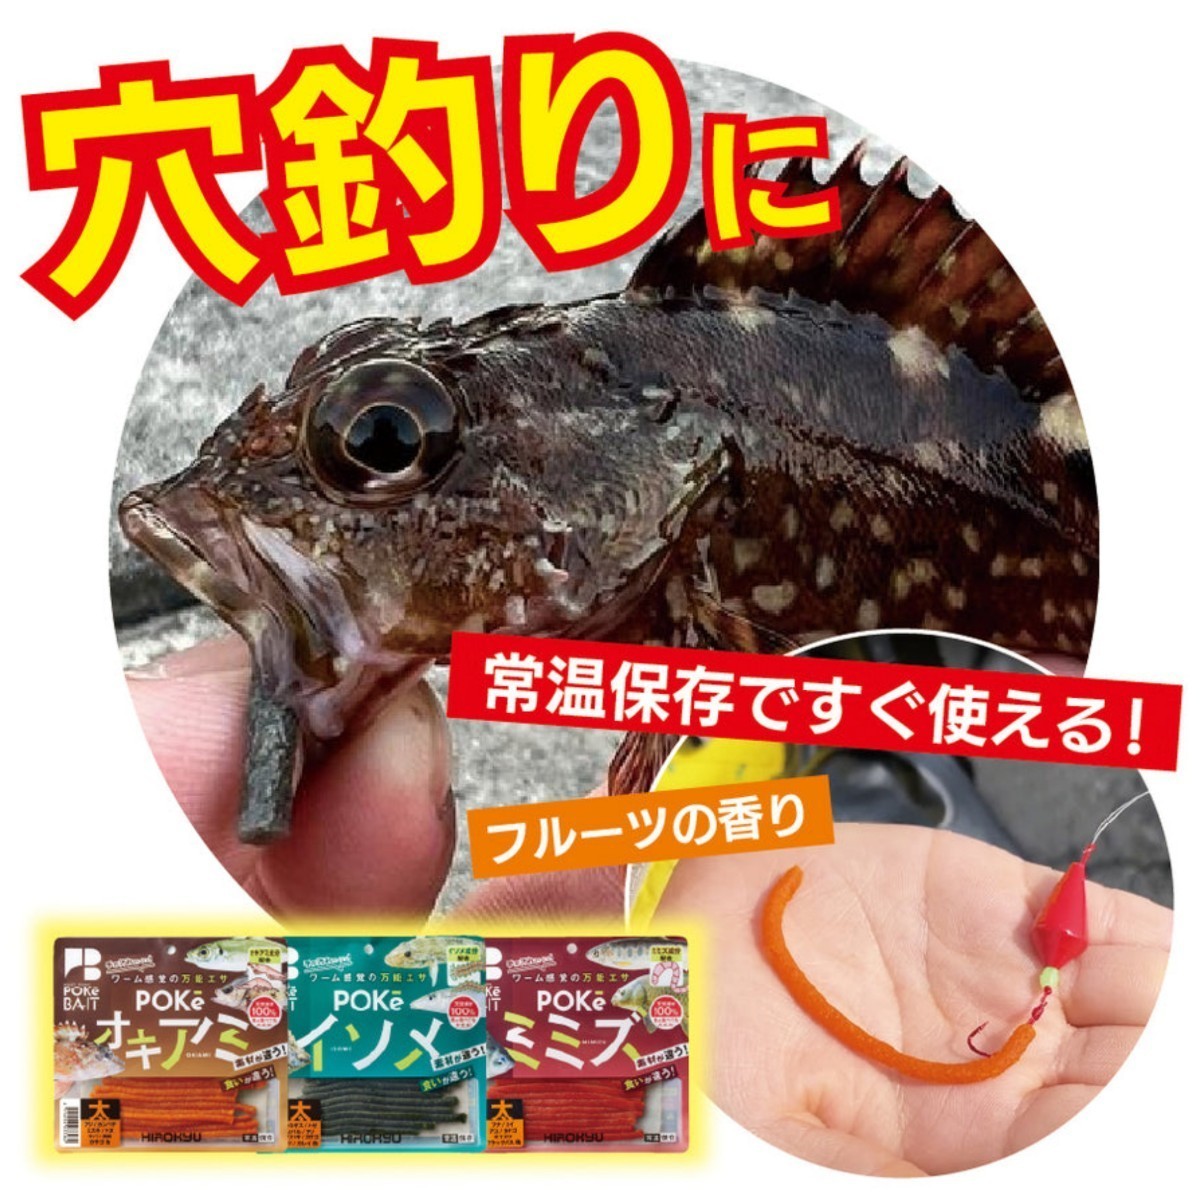  Hirokyu [pokeo Kia mi] futoshi 2 шт рыбалка e сауэр m. рыбалка дыра рыбалка 